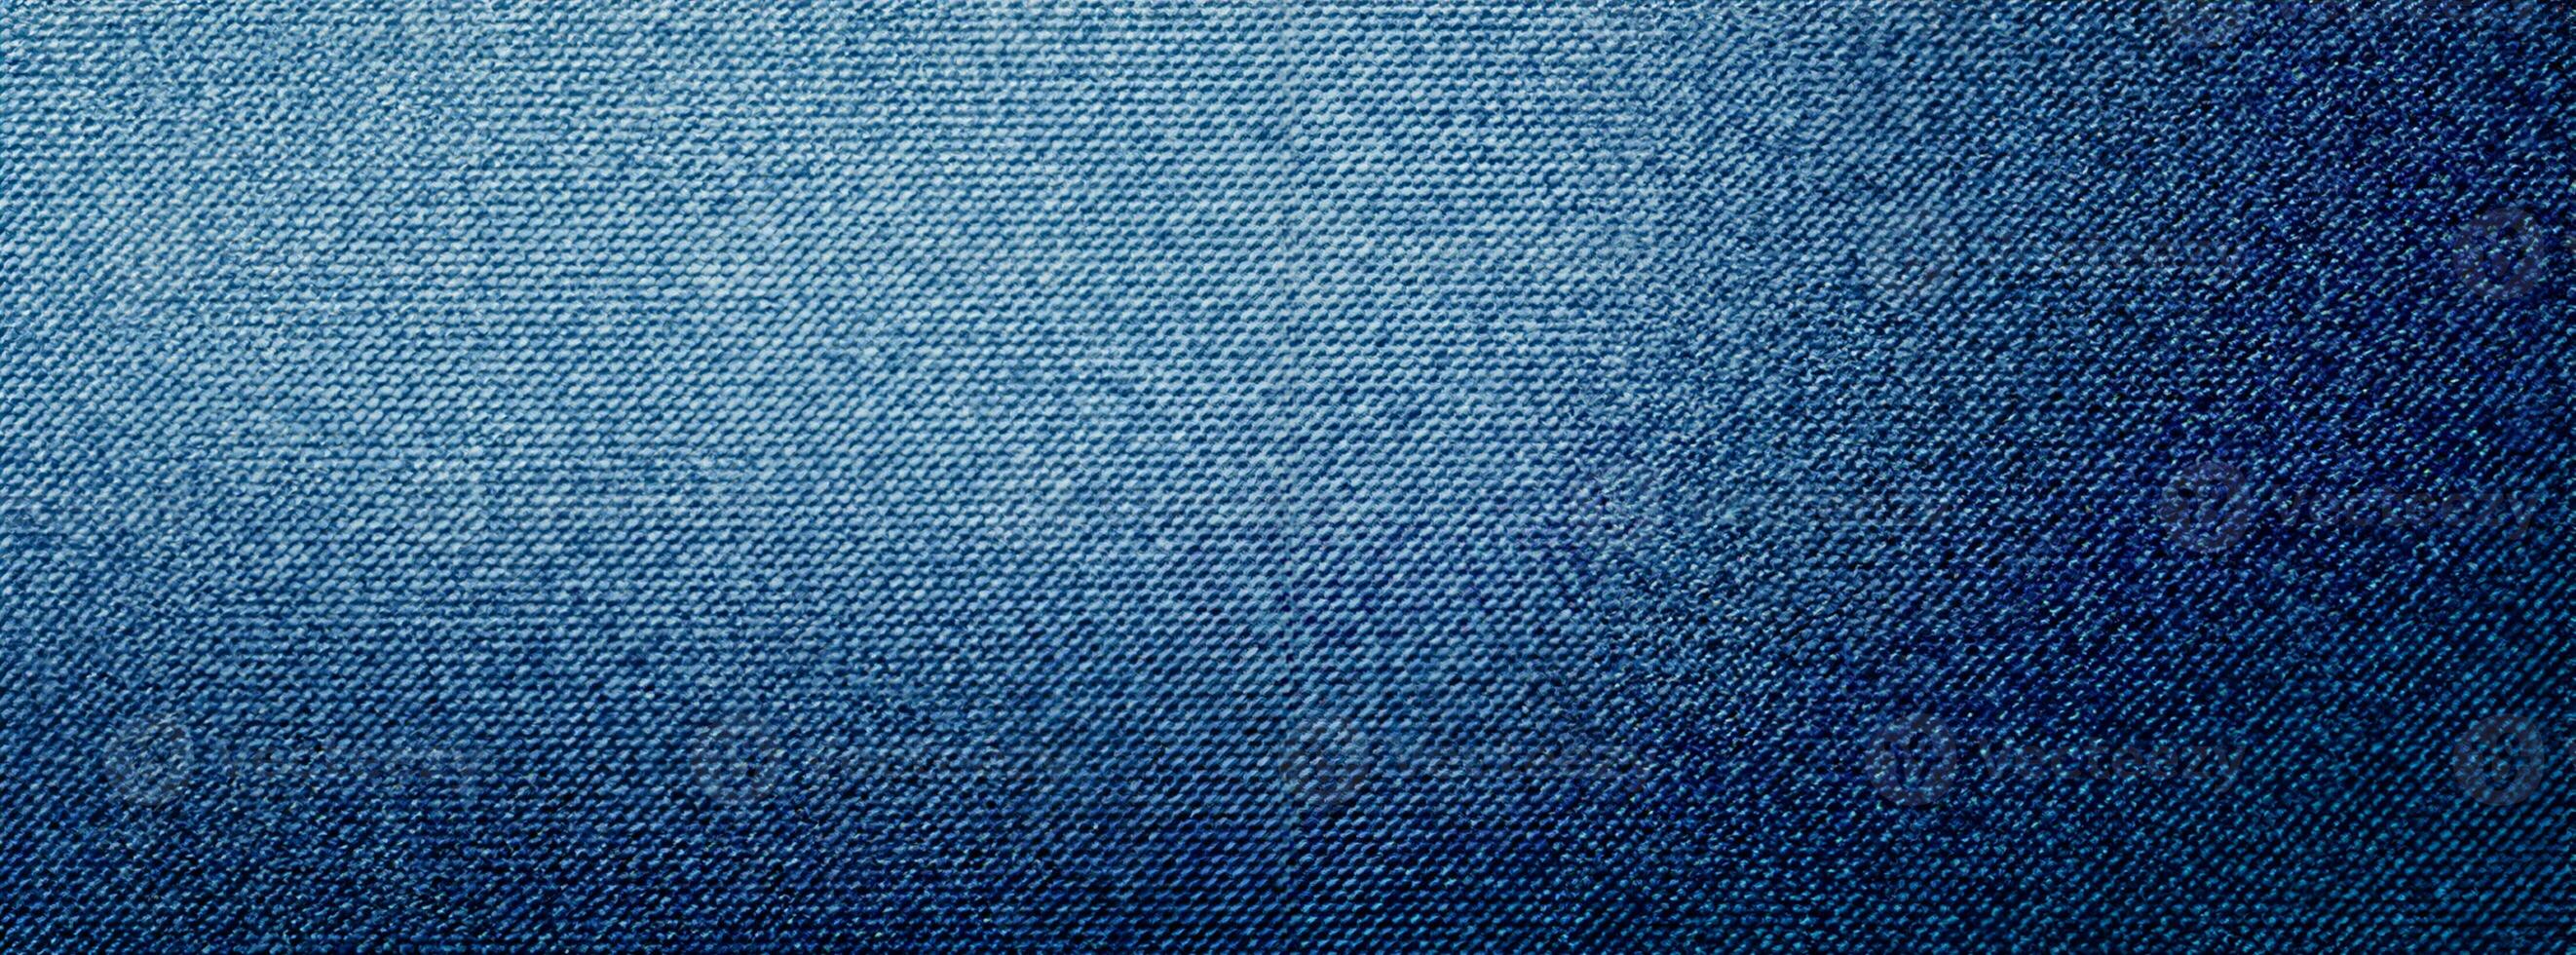 Blue Denim Textile background Illustration photo